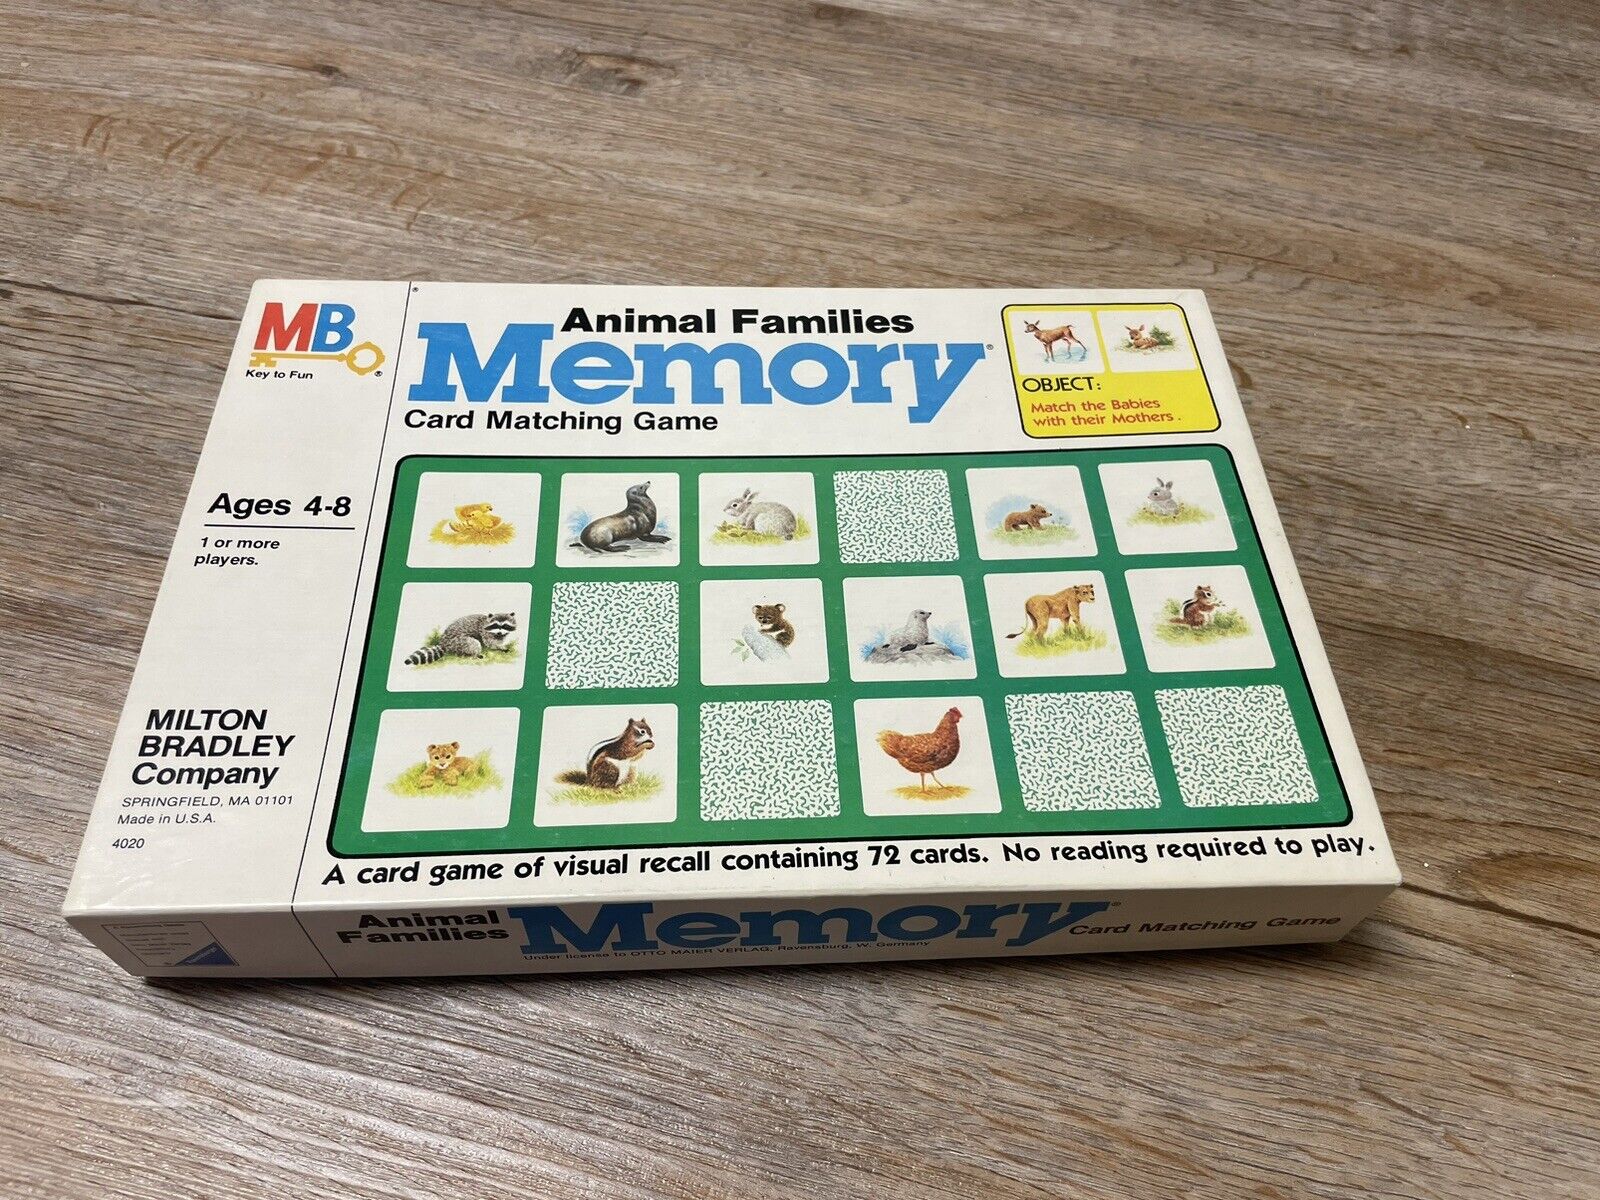 Vintage 1980 Milton Bradley Animal Families Memory Card Matching Game - Complete